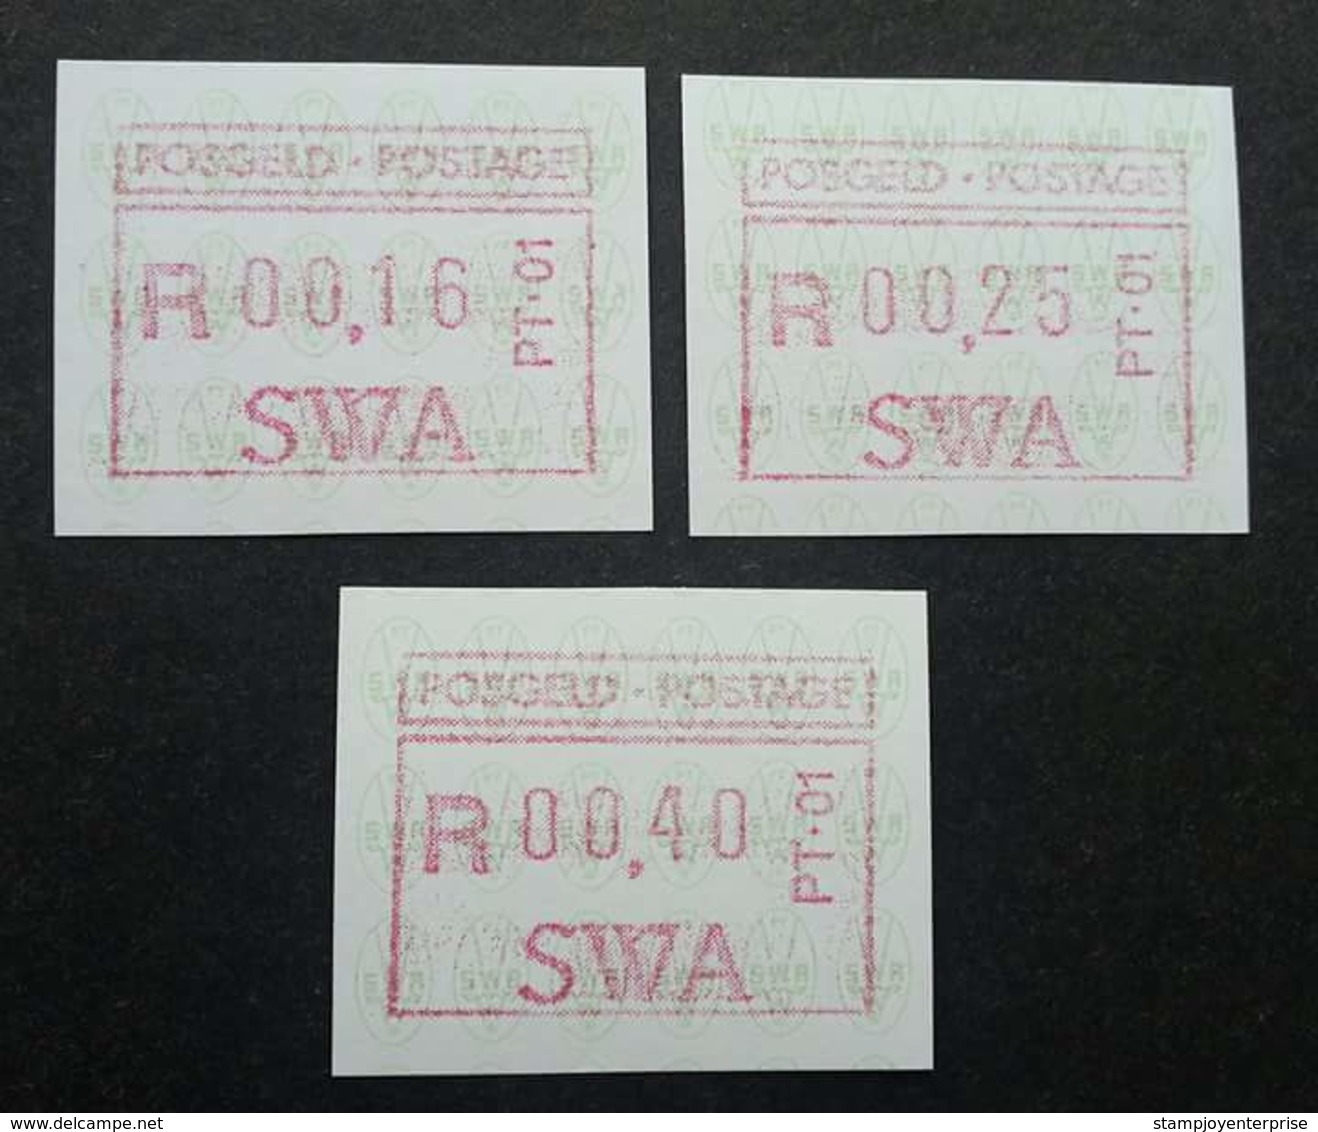 South Africa SWA 1988 ATM (frama Label Stamp) MNH - Automatenmarken (Frama)